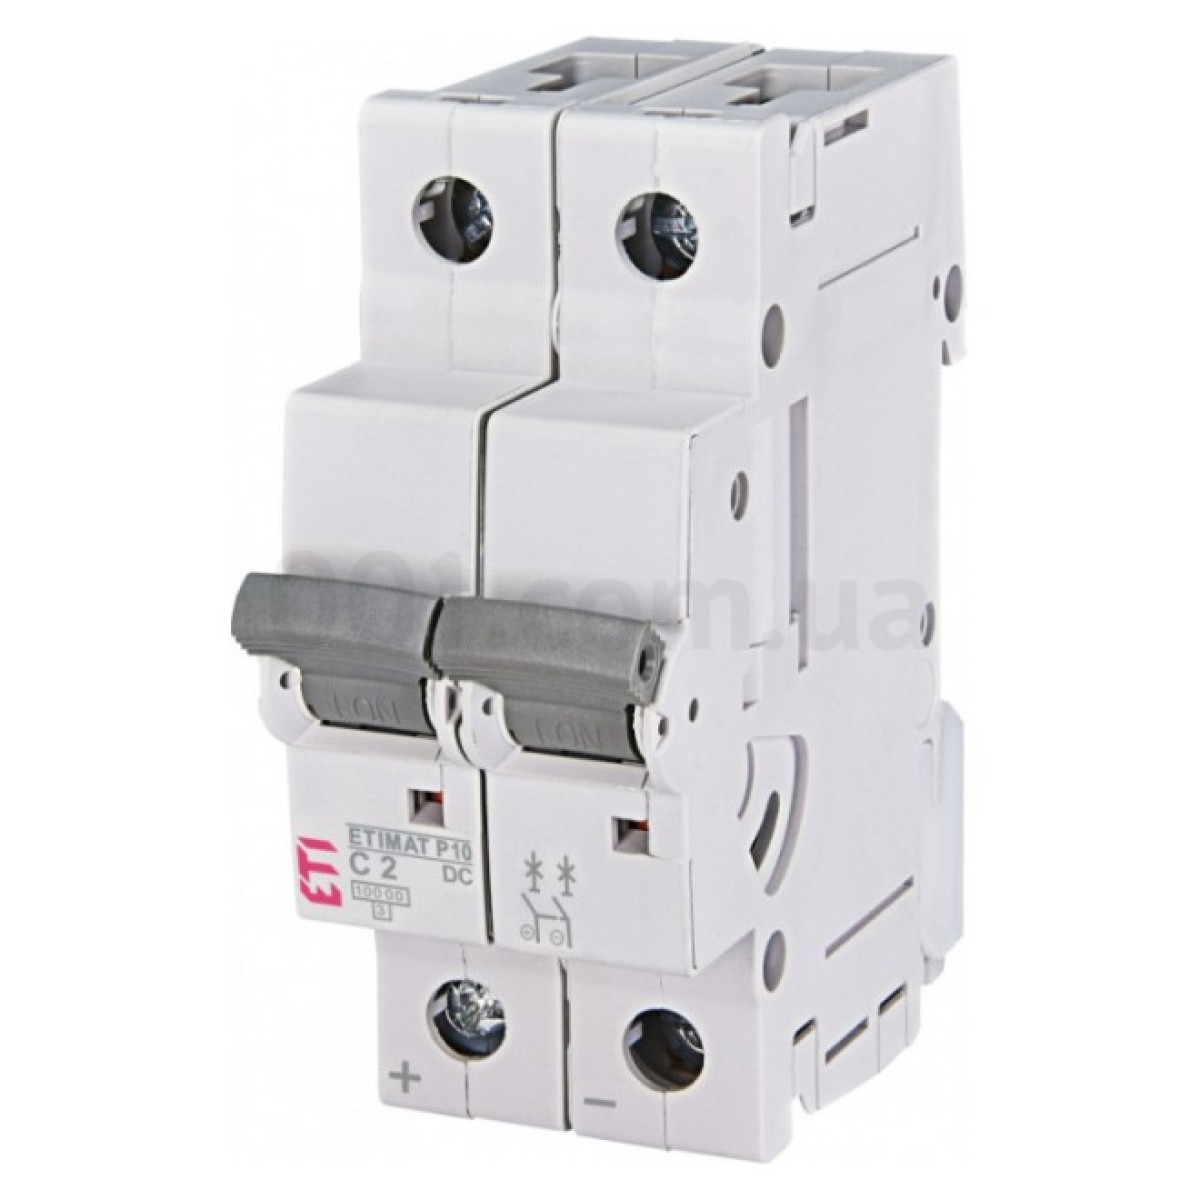 Автоматичний вимикач ETIMAT P10 DC (10кА) 2P 2 А хар-ка C, ETI 256_256.jpg